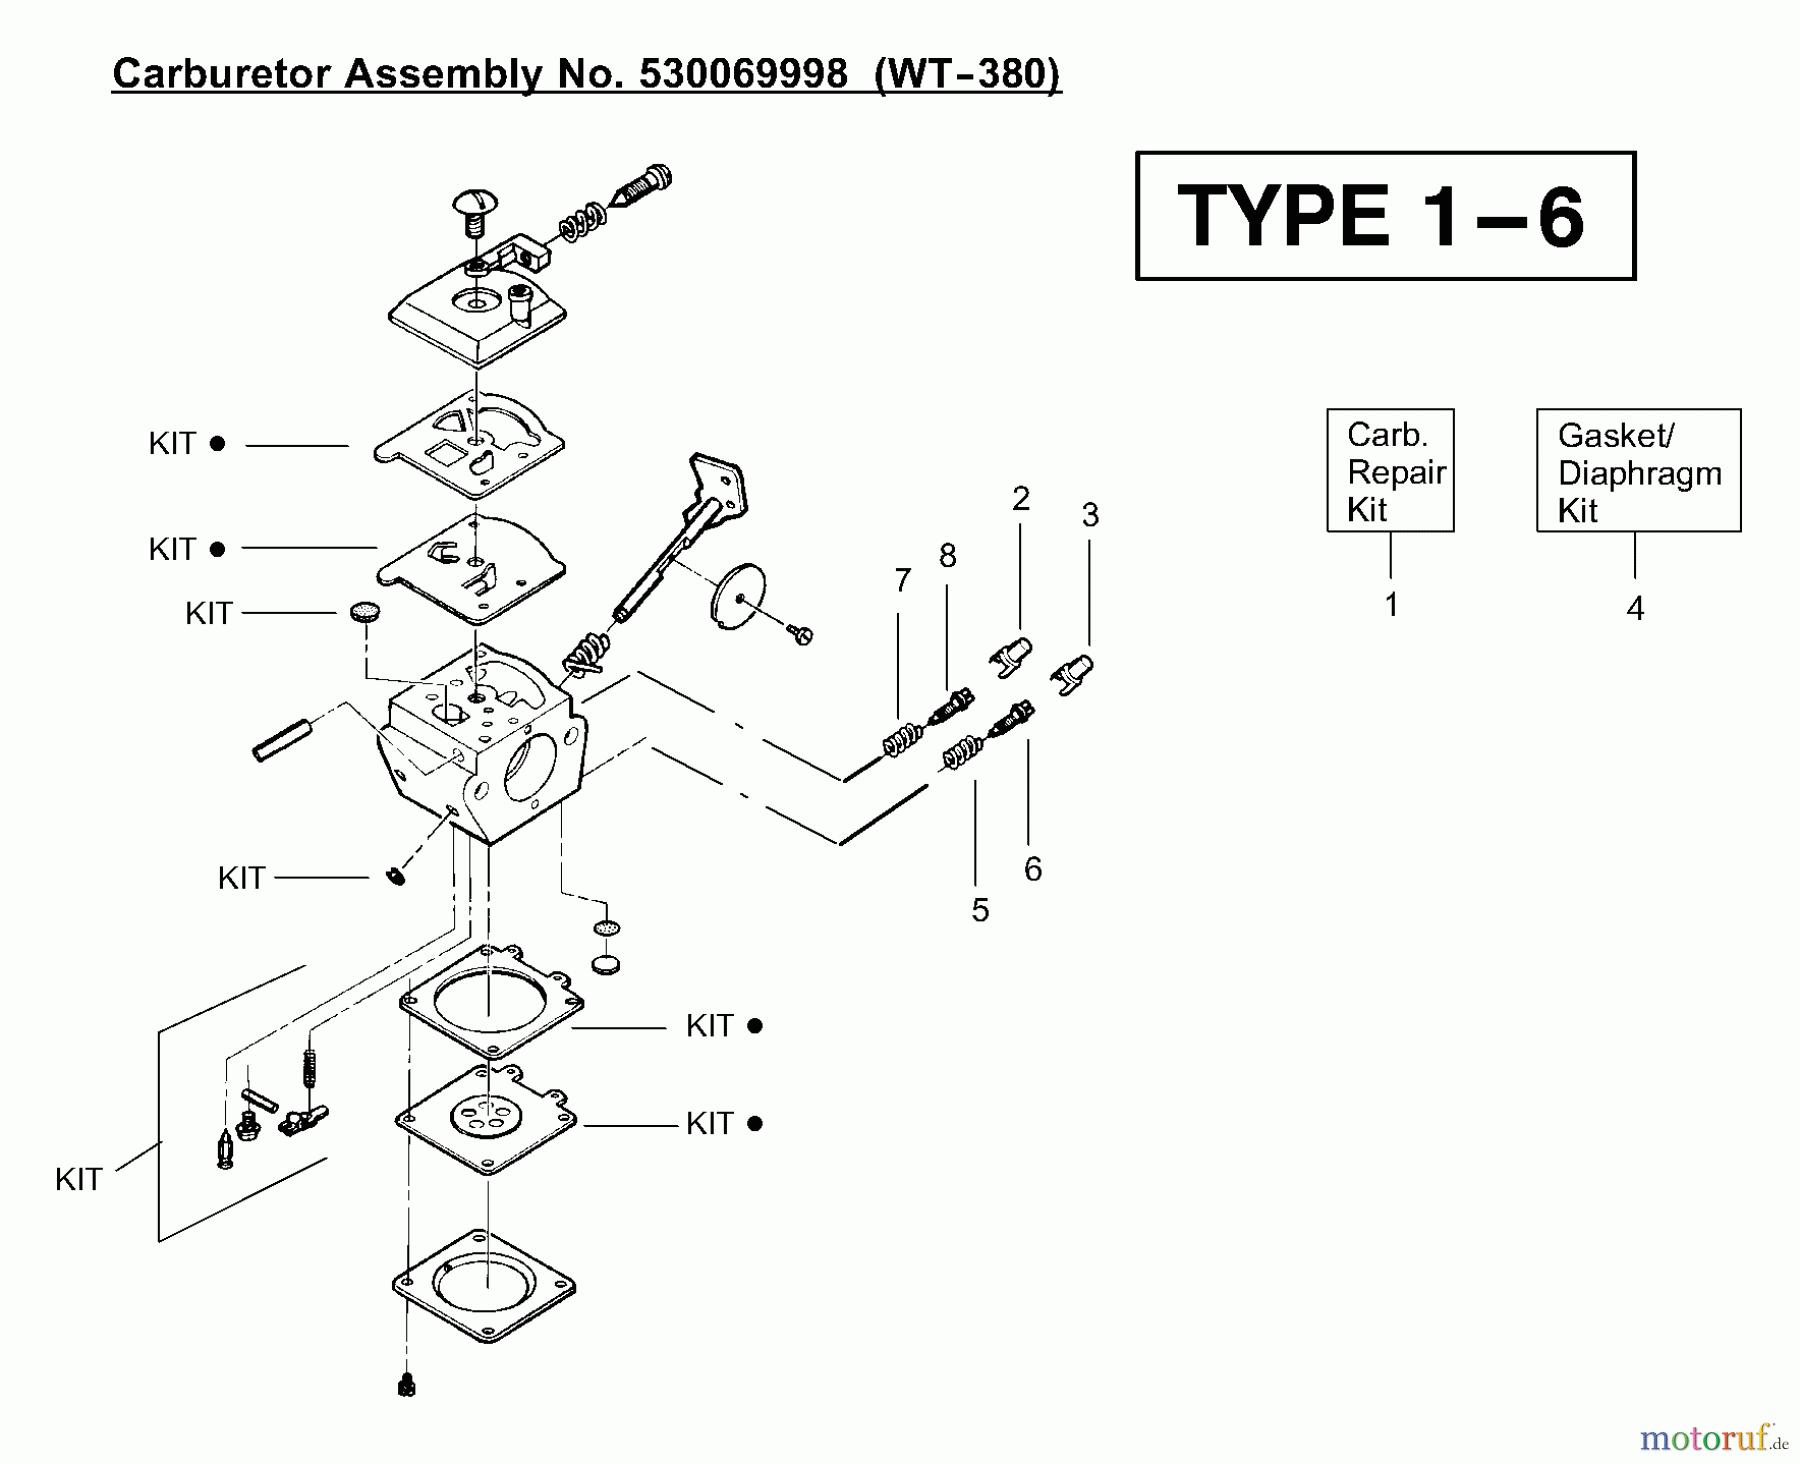  Poulan / Weed Eater Motorsensen, Trimmer BC2400 (Type 3) - Weed Eater String Trimmer Carburetor Assembly (WT380) 530069998